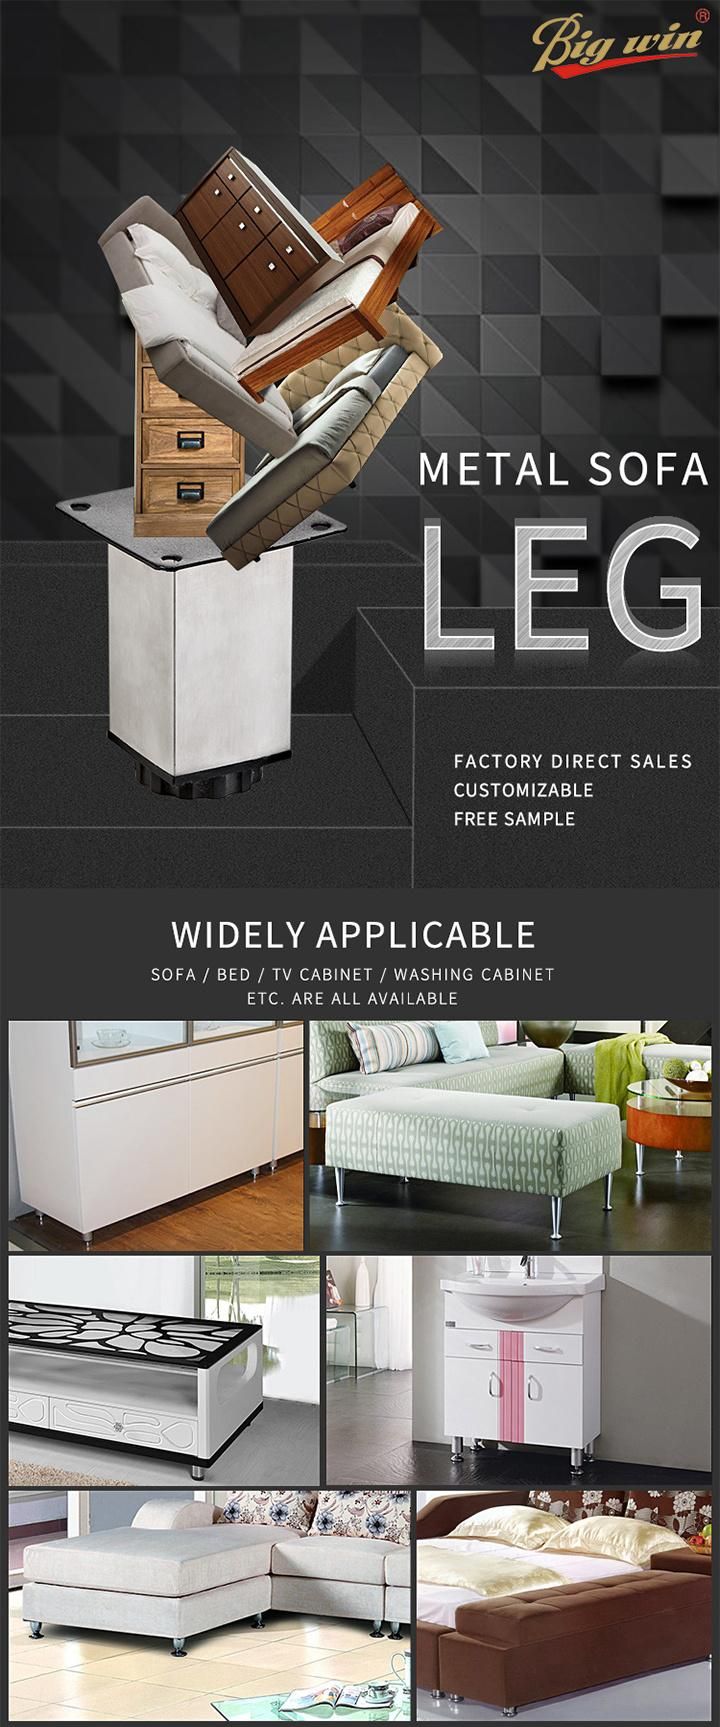 Stainless Steel Table Legs and Adjustable Legs